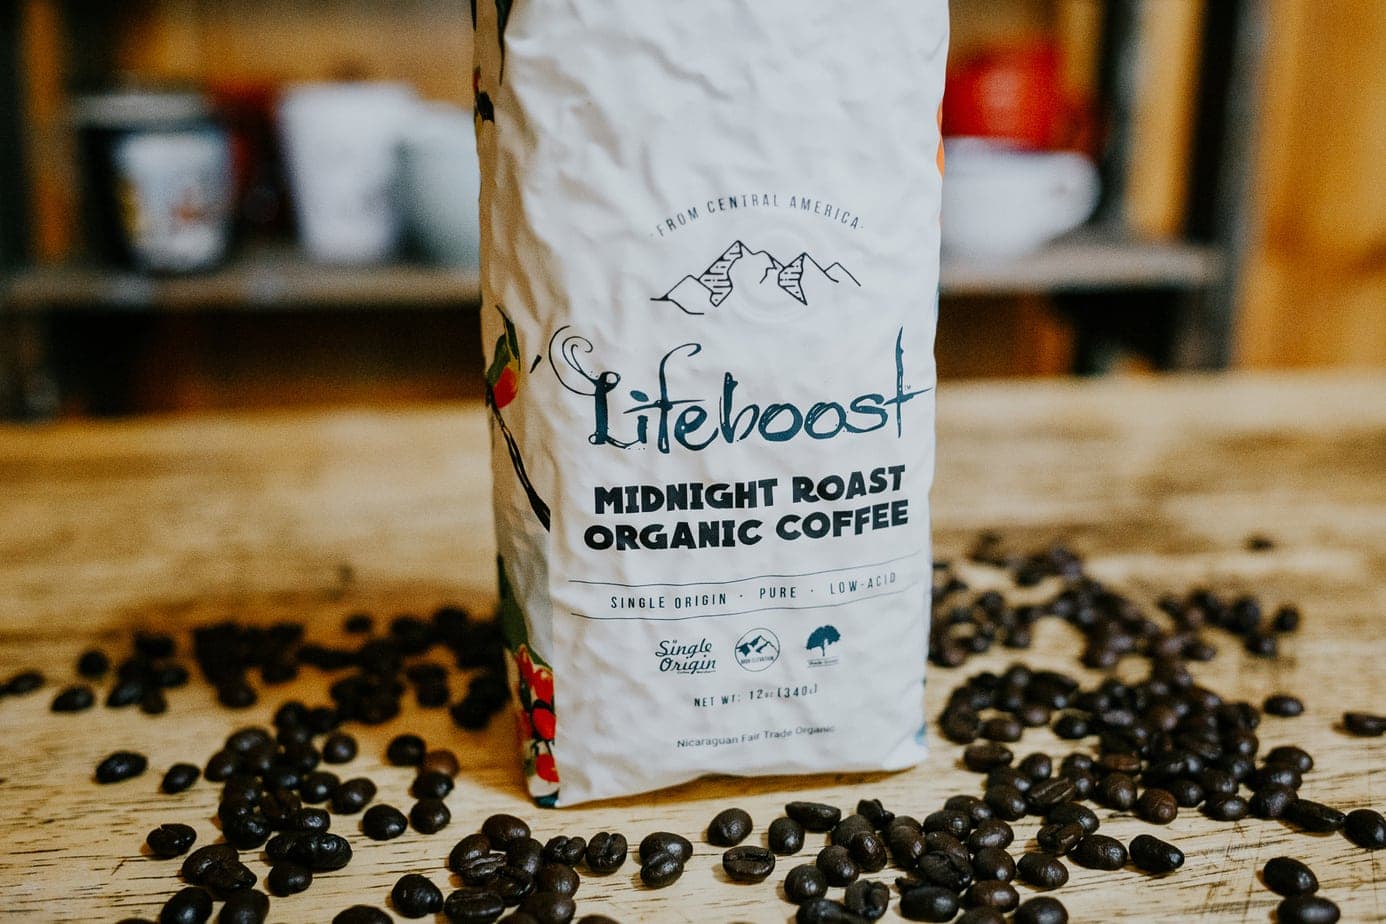 Lifeboost minight roast organic coffee